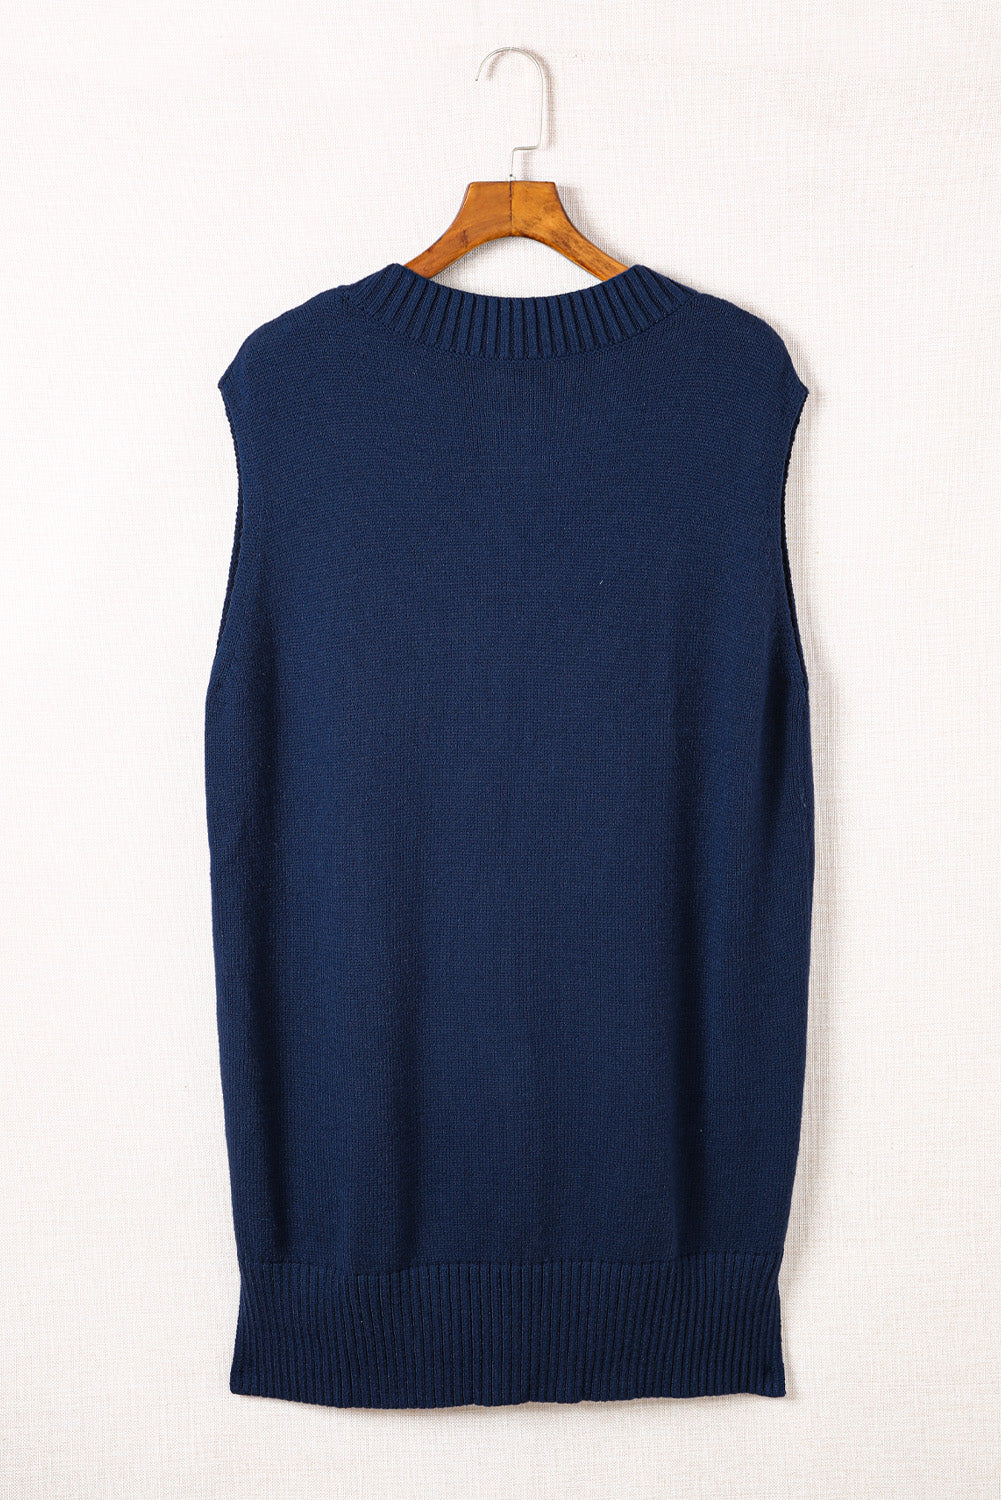 Dark Blue Knit Vest Pullover Sweater